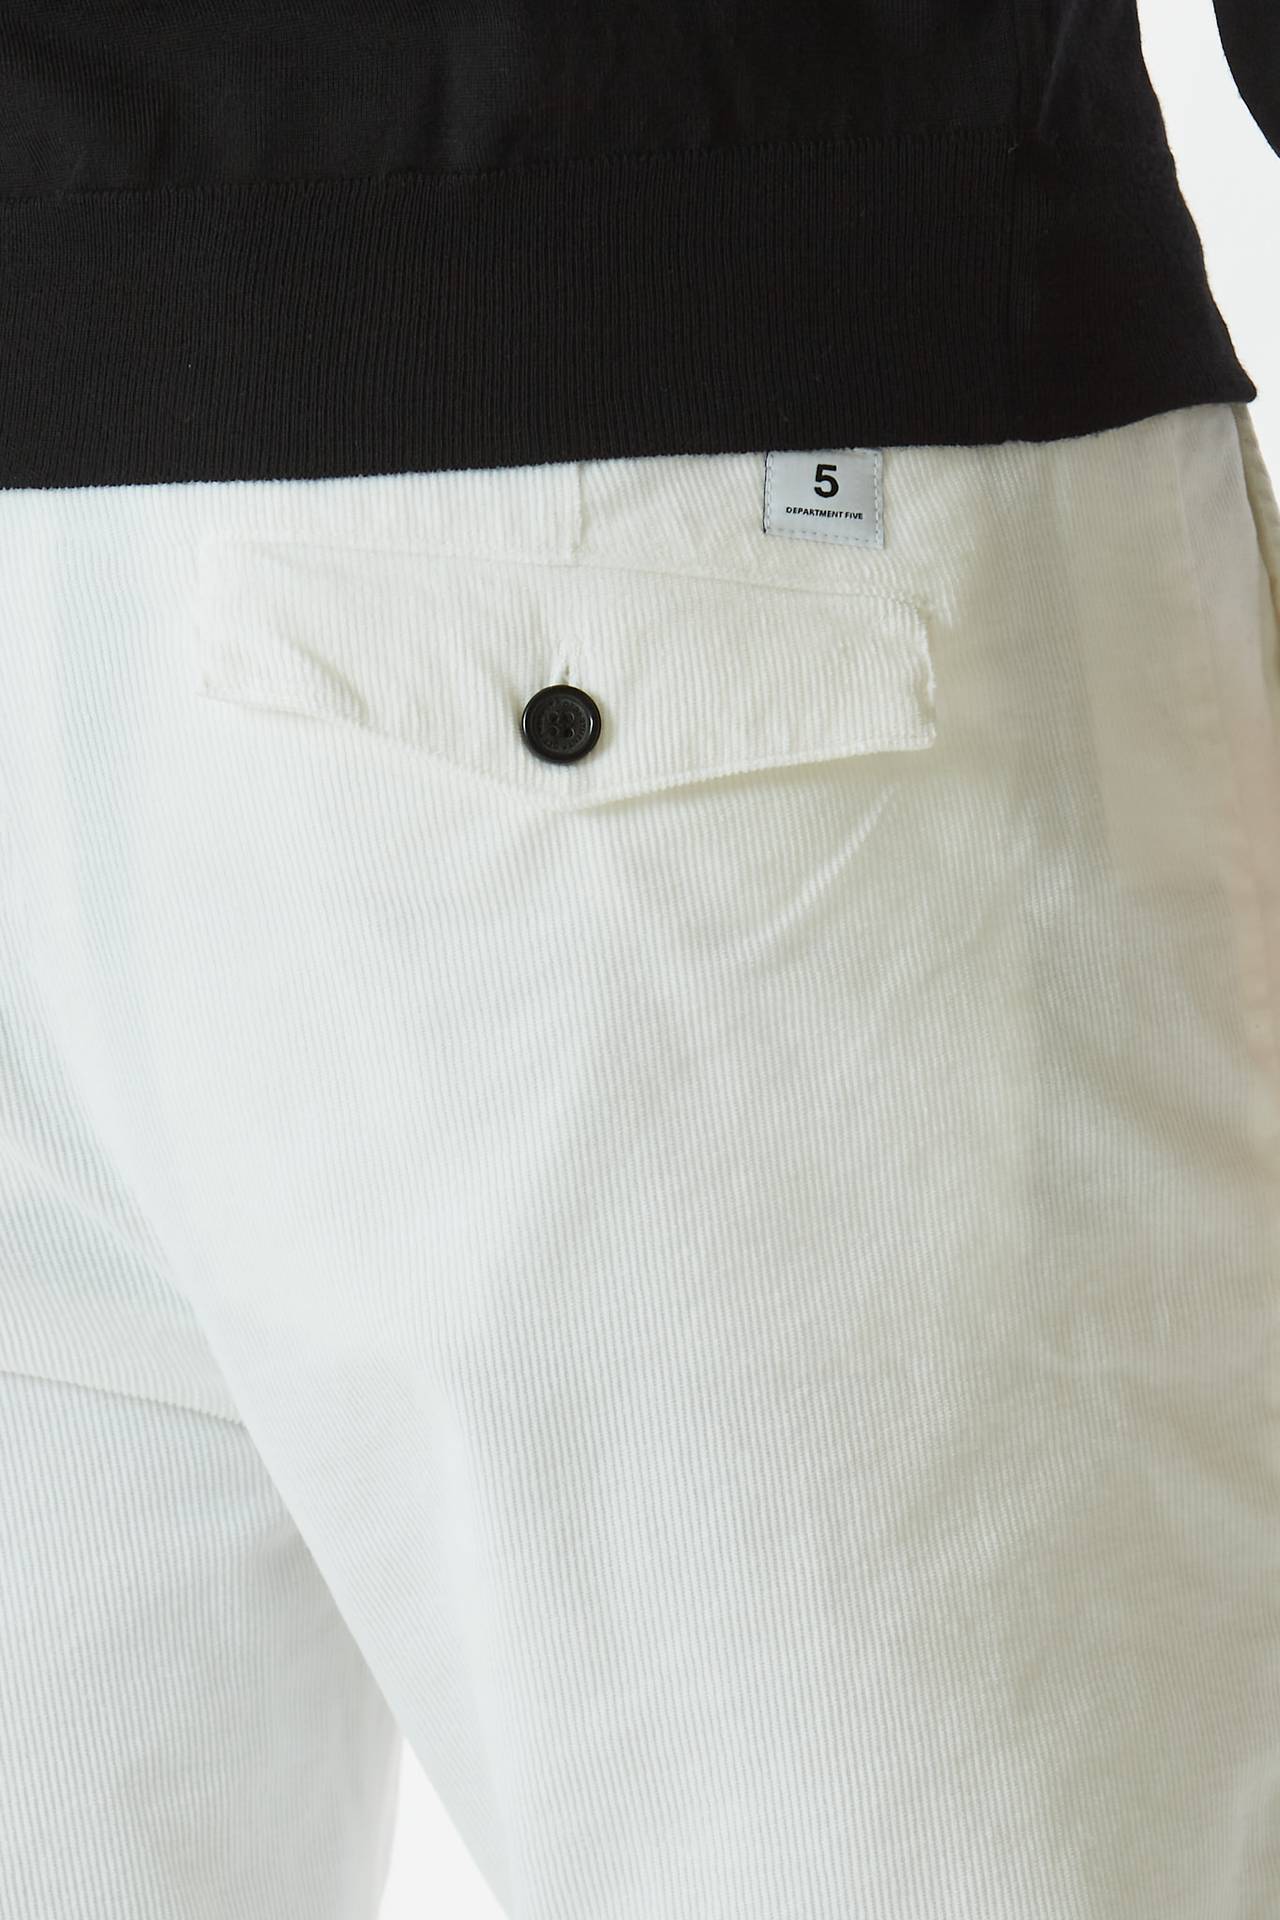 Pantalone PRINCE PENCES bianco